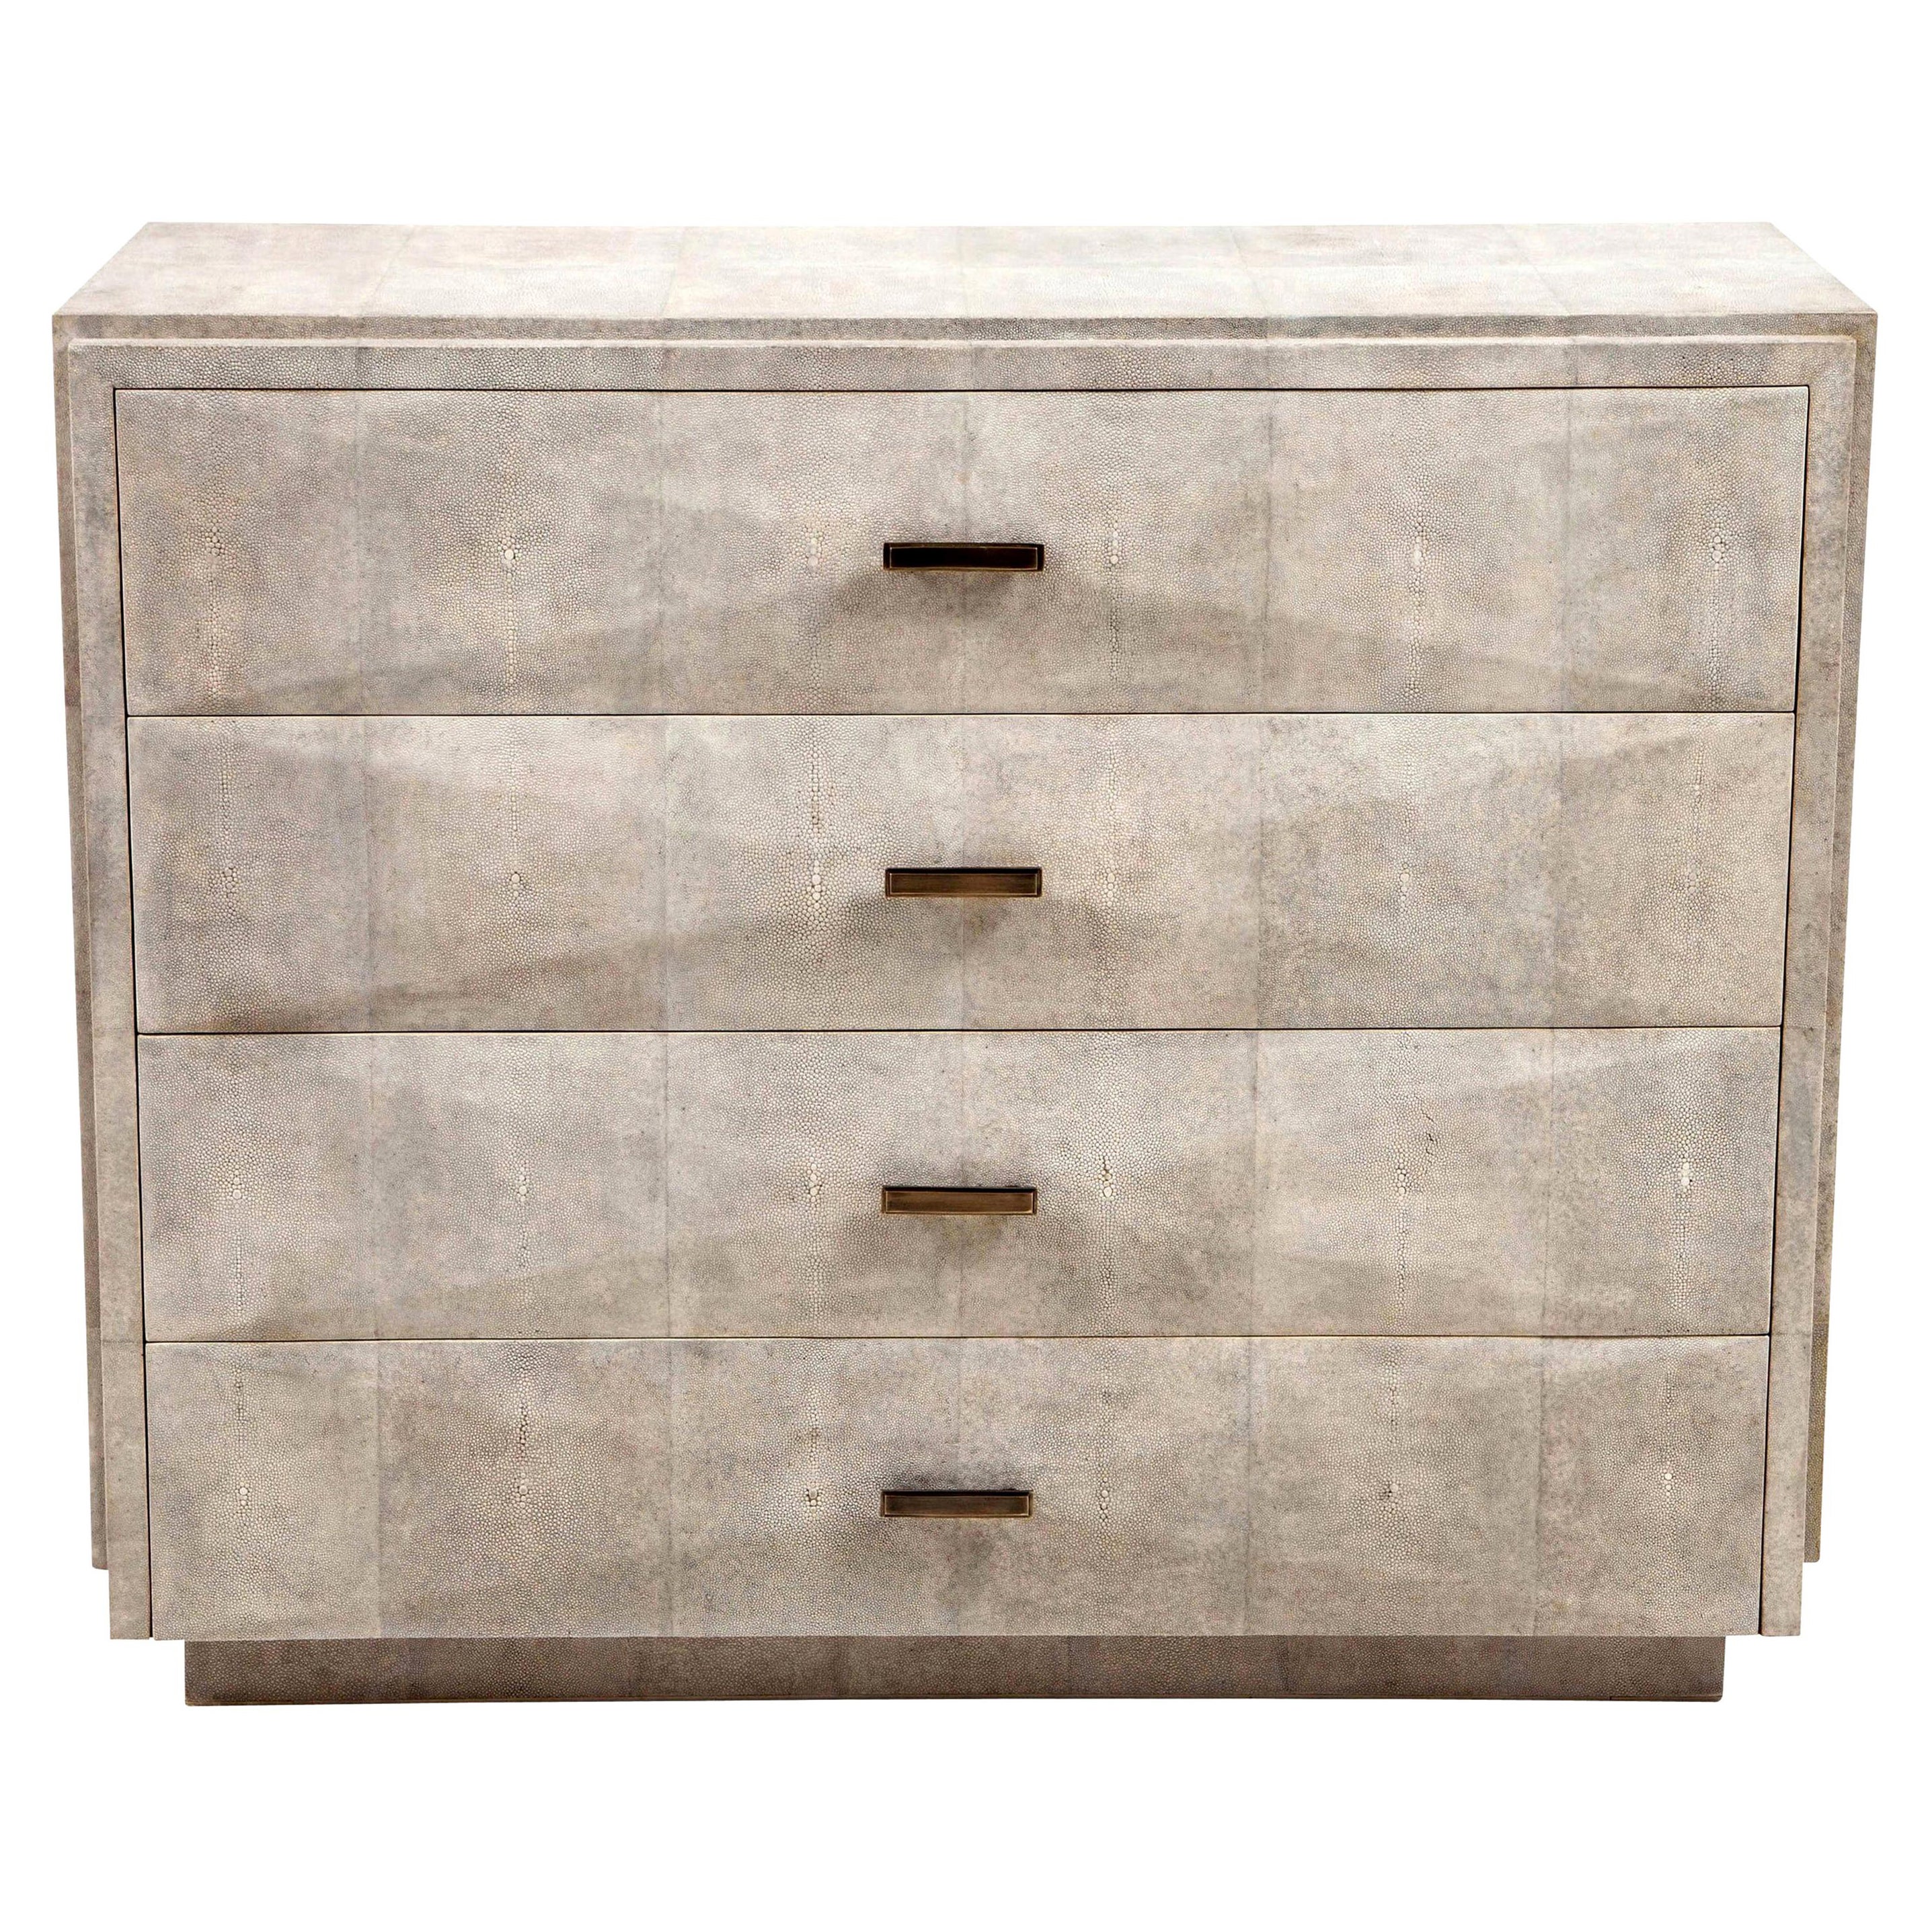 Shagreen Dresser with Brass Handles, Cream, Contemporary, Art Deco Style, Large